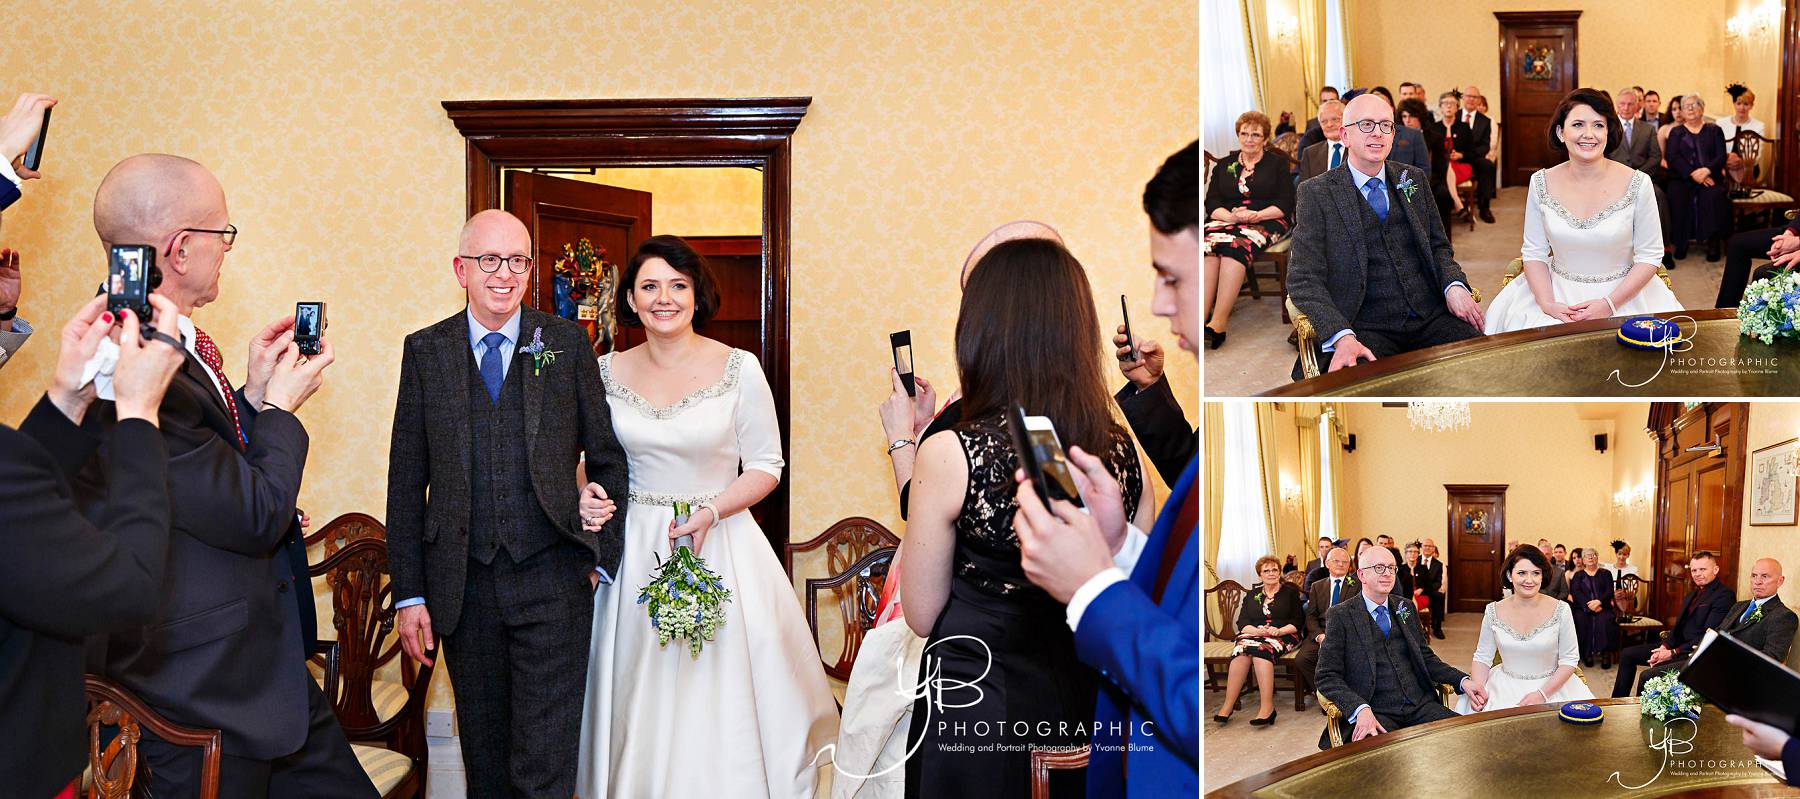 Brydon Room Wedding Ceremony by Chelsea Wedding Photographer YBPHOTOGRAPHIC